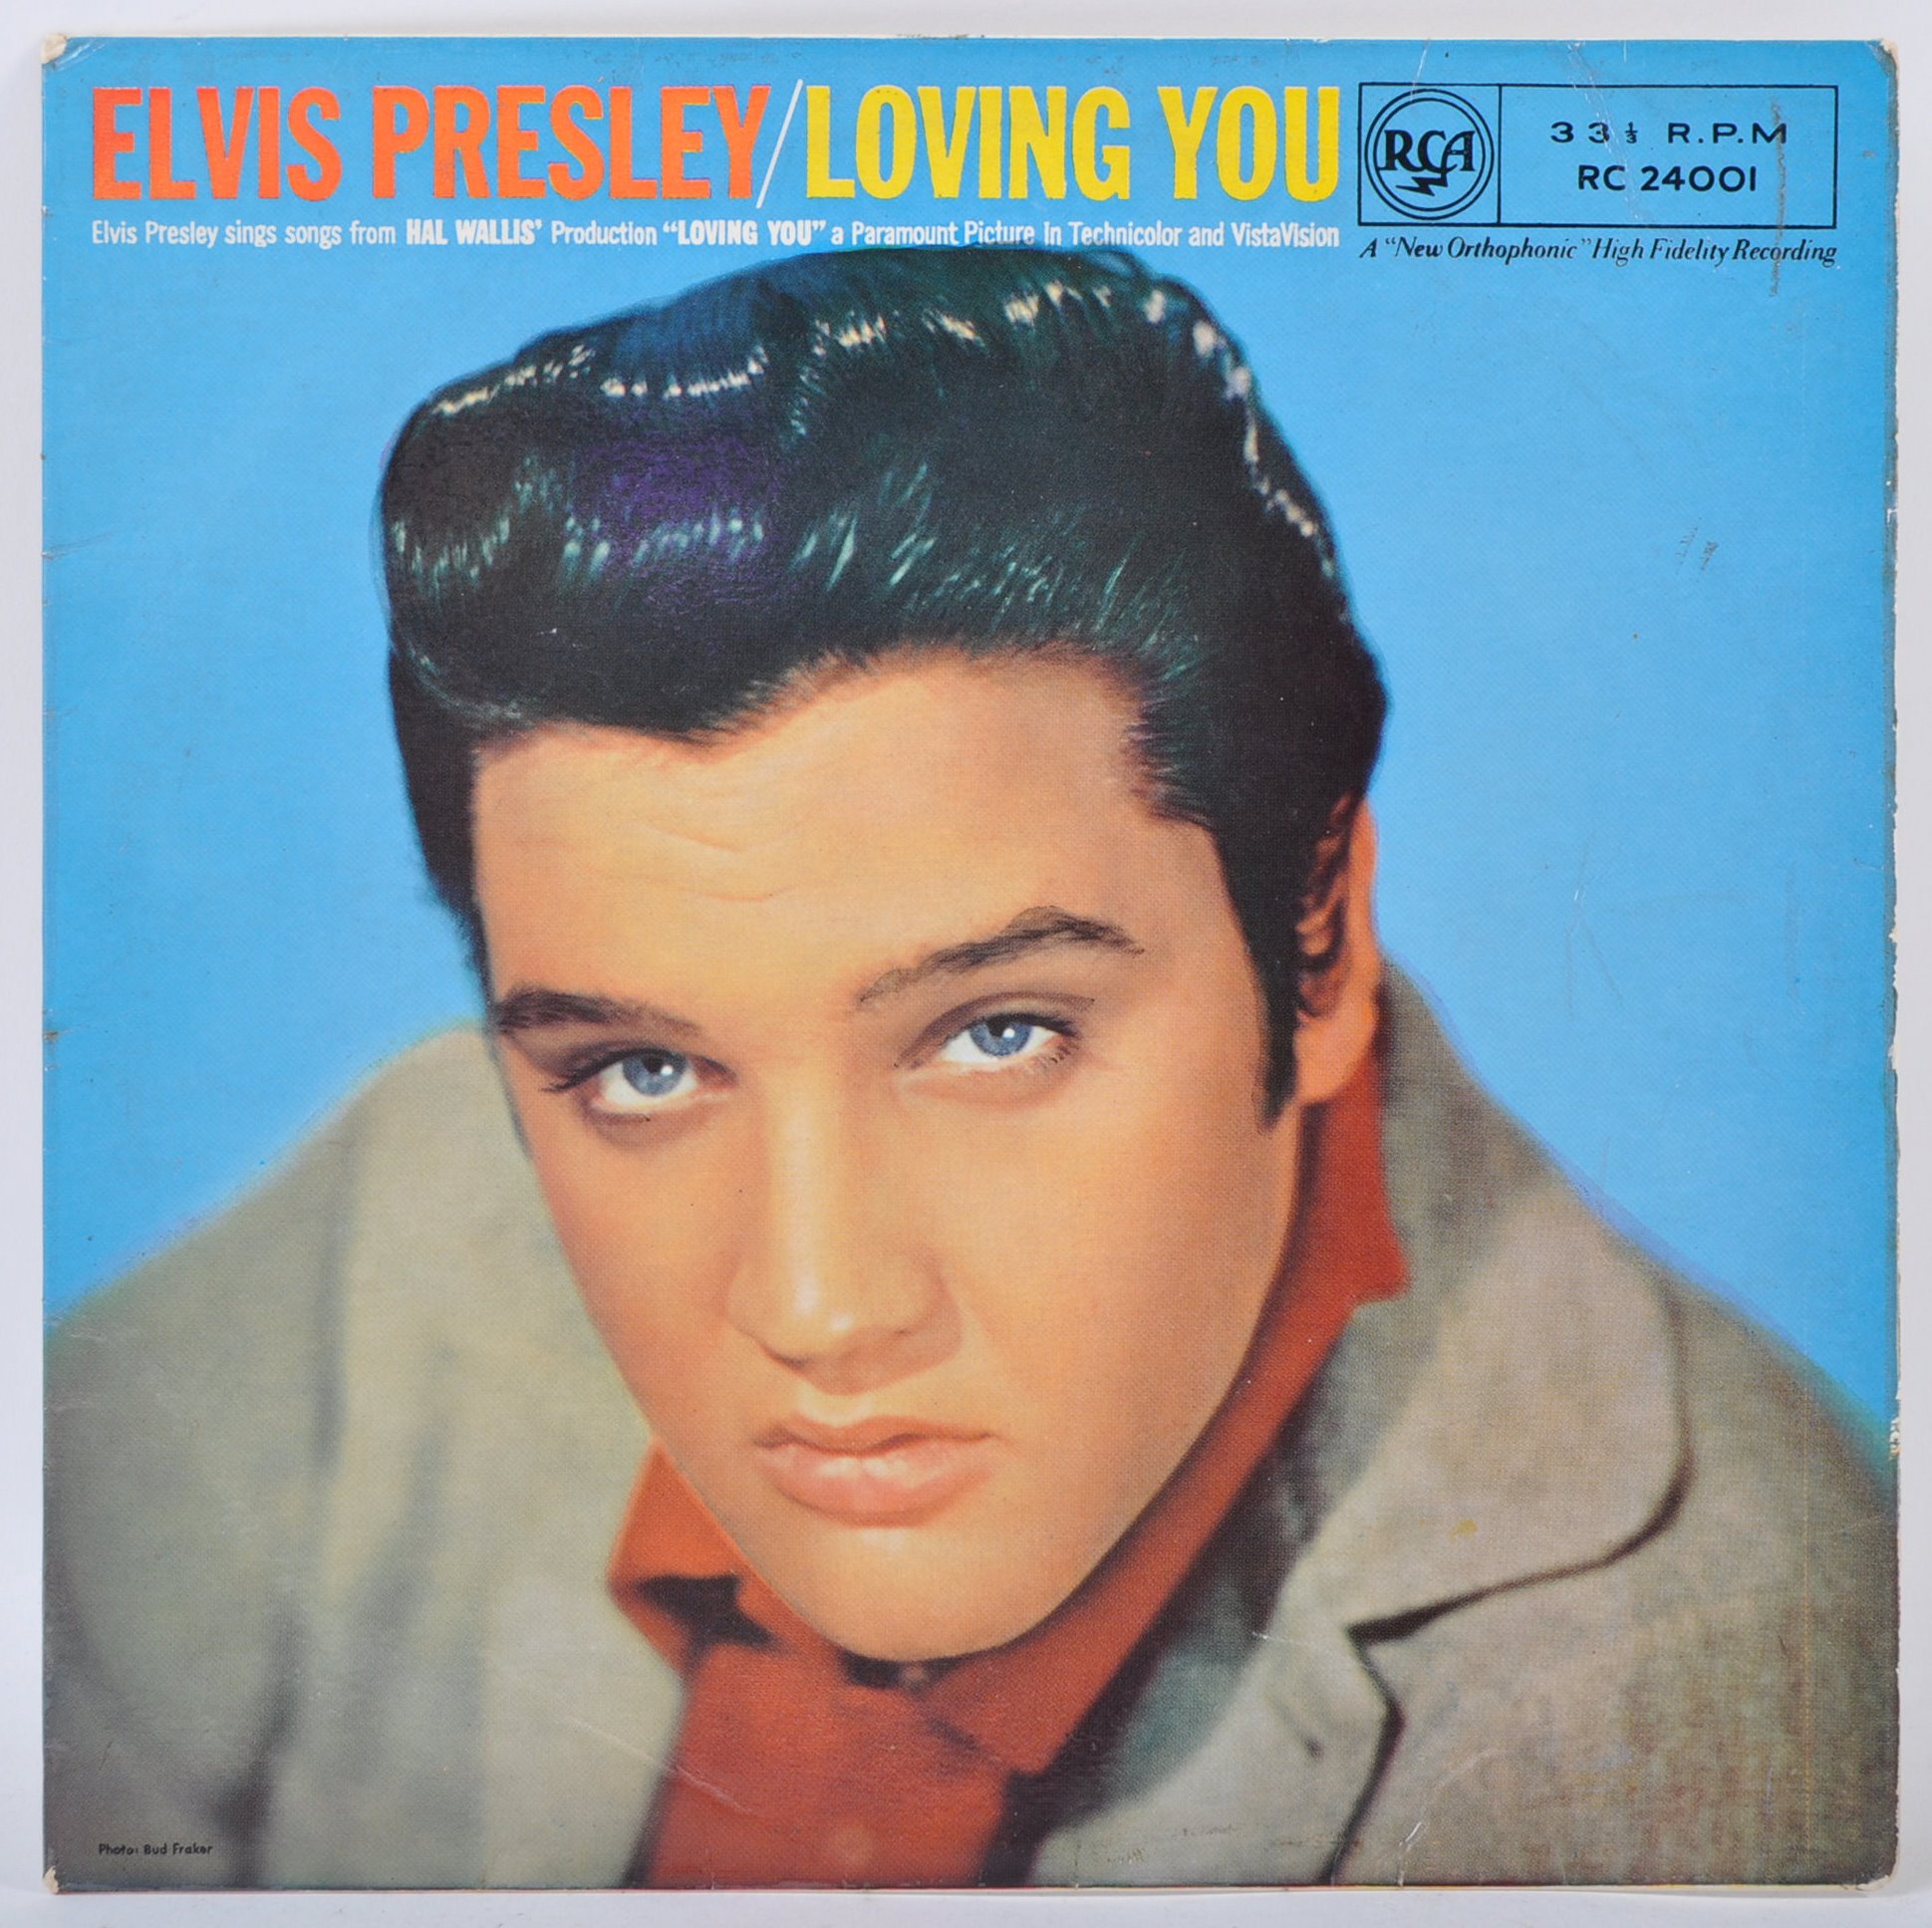 ELVIS PRESLEY - LOVING YOU - 1957 10" RCA LABEL RELEASE